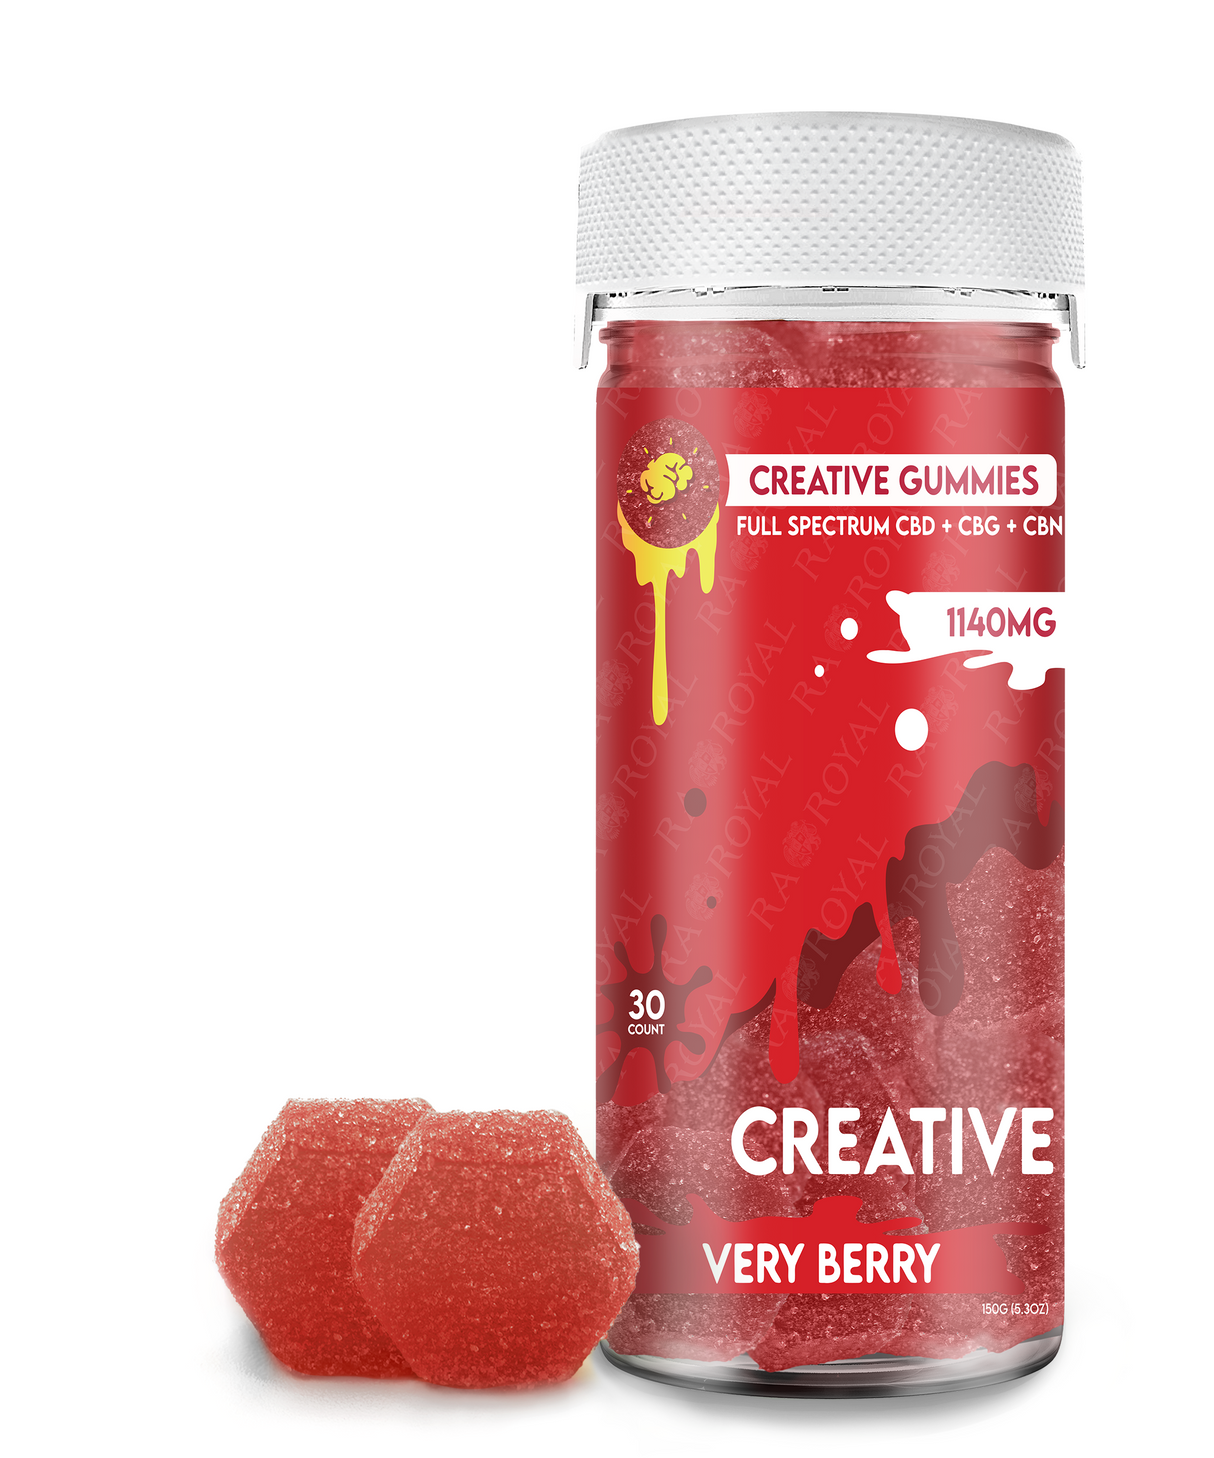 Full Spectrum CBD+CBG+CBN 30CT Gummy Jar: Very Berry (Creative)